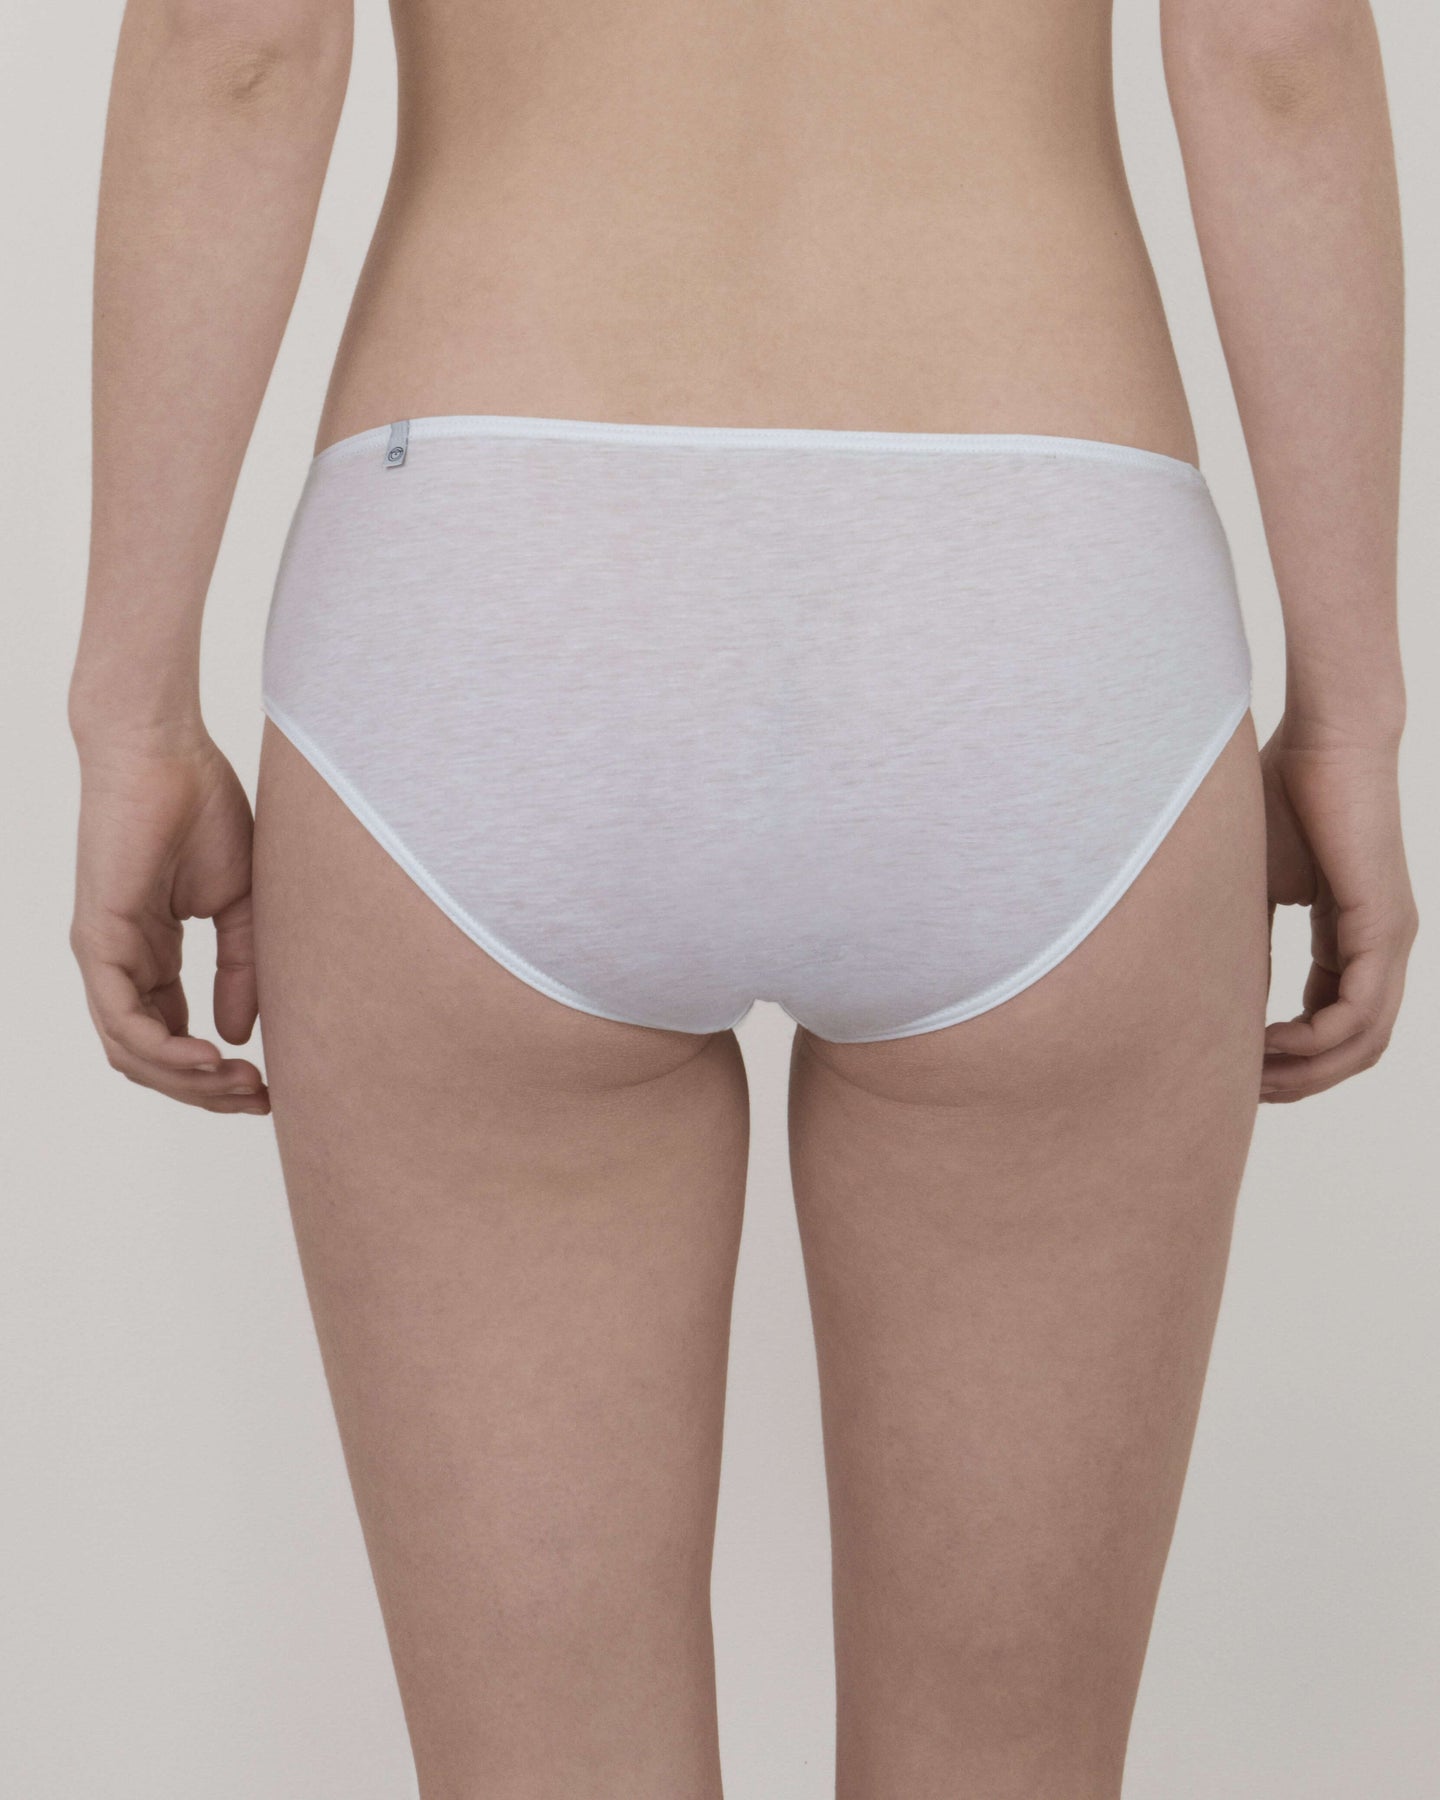 ODDO BODY 100% Organic Pima Cotton Underwear High Waisted (Chalk